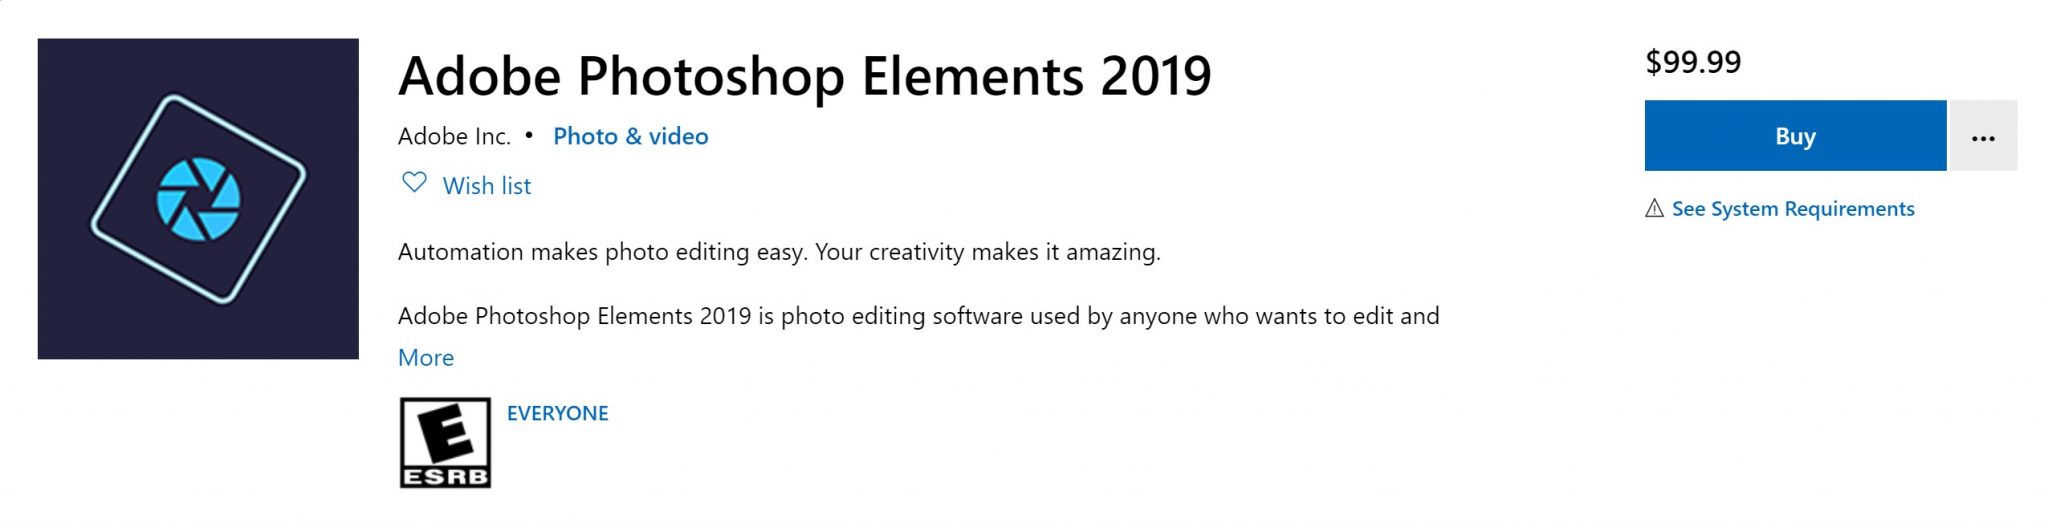 adobe photoshop elements 2019 software